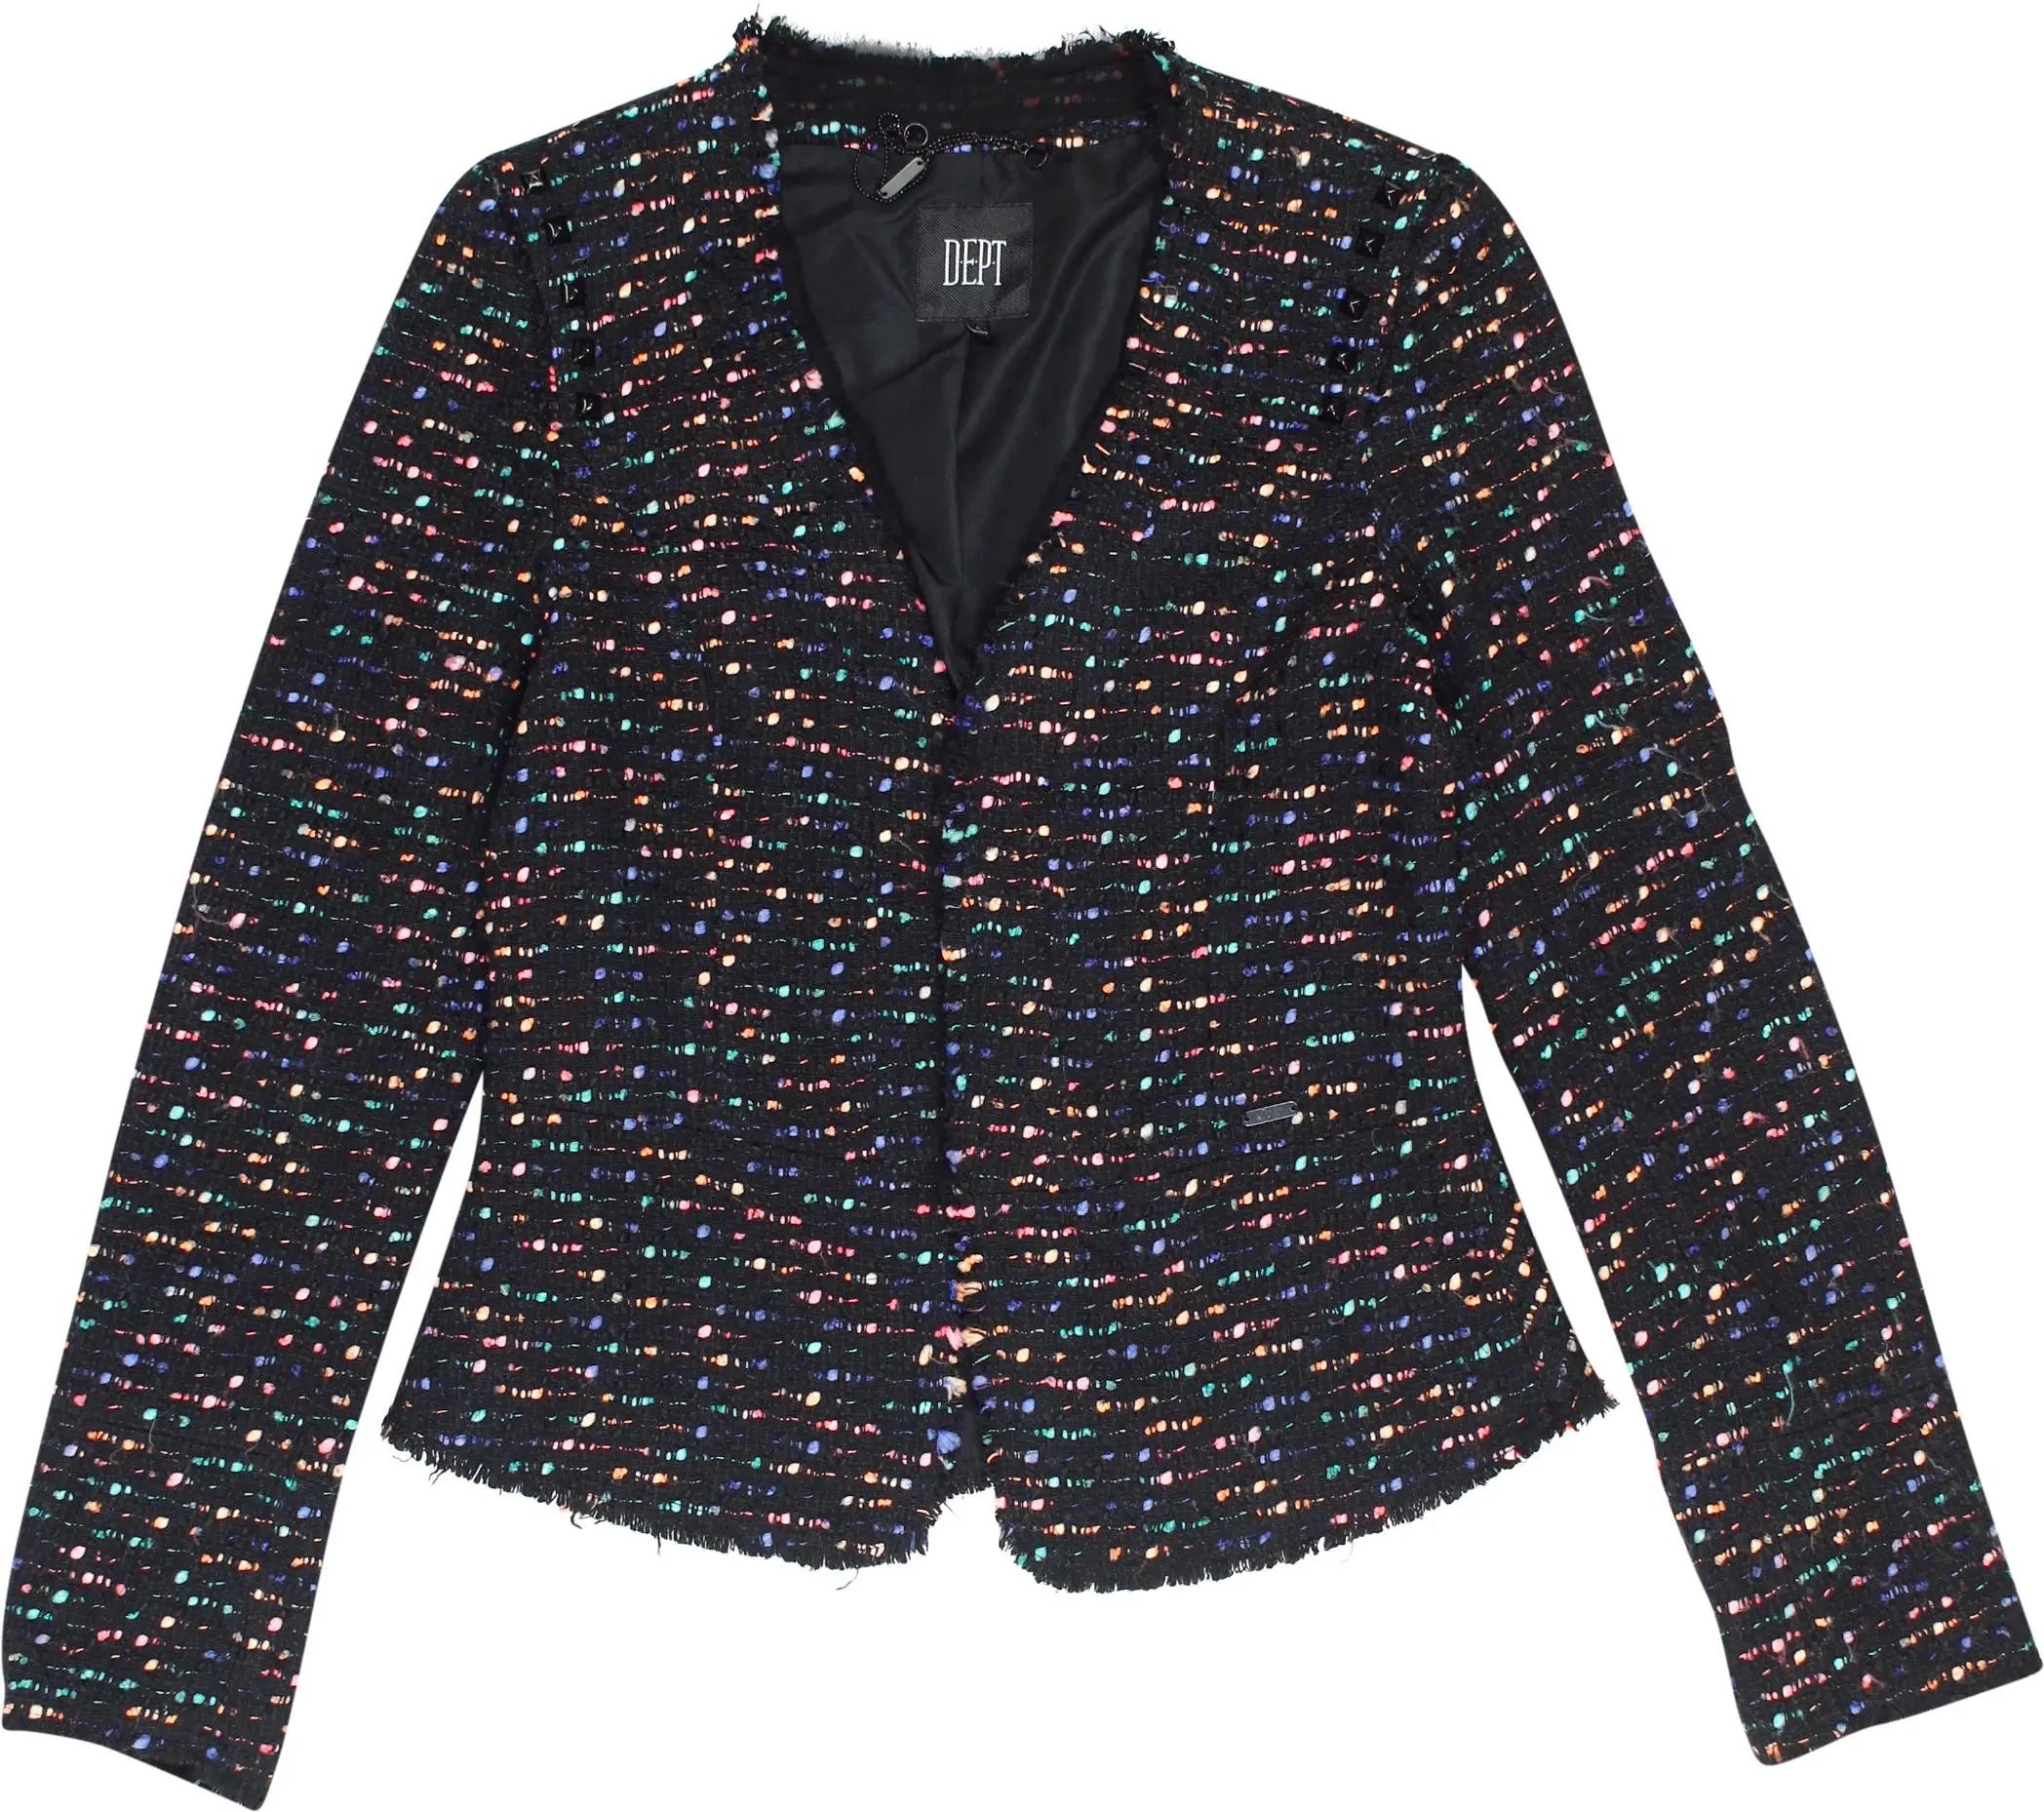 Dept - Tweed Jacket- ThriftTale.com - Vintage and second handclothing